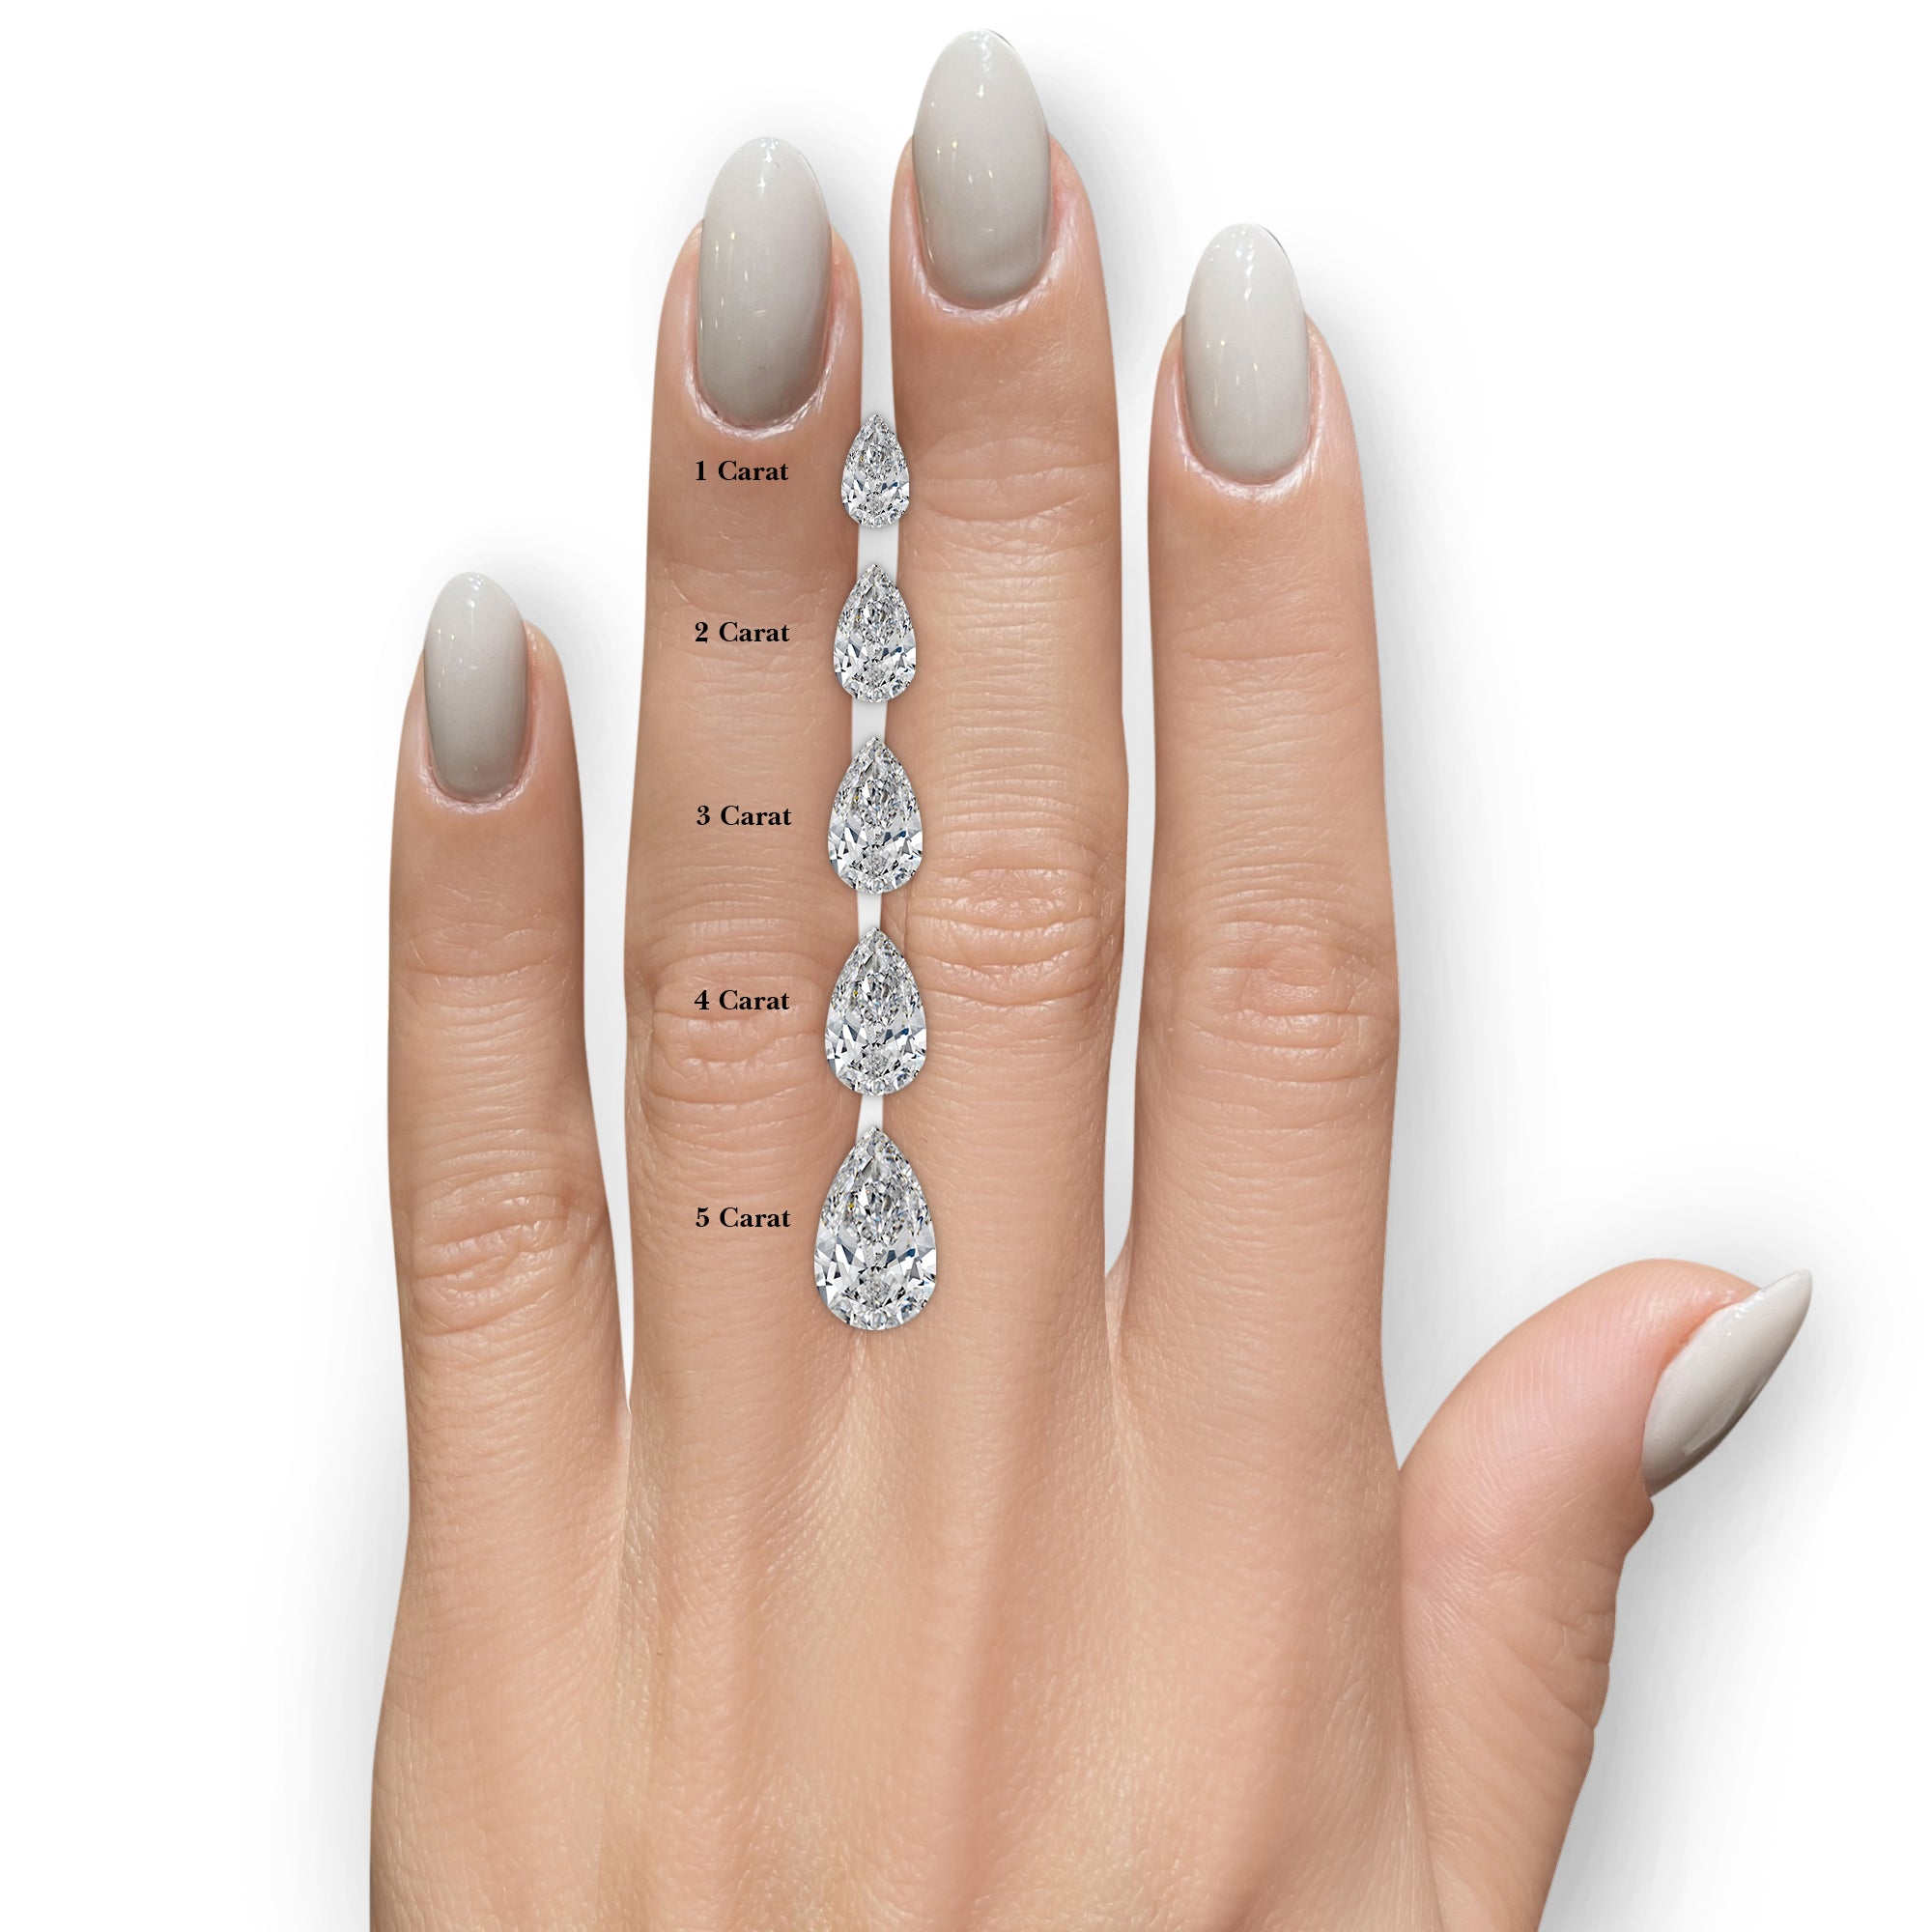 Willow Diamond Engagement Ring -14K Rose Gold